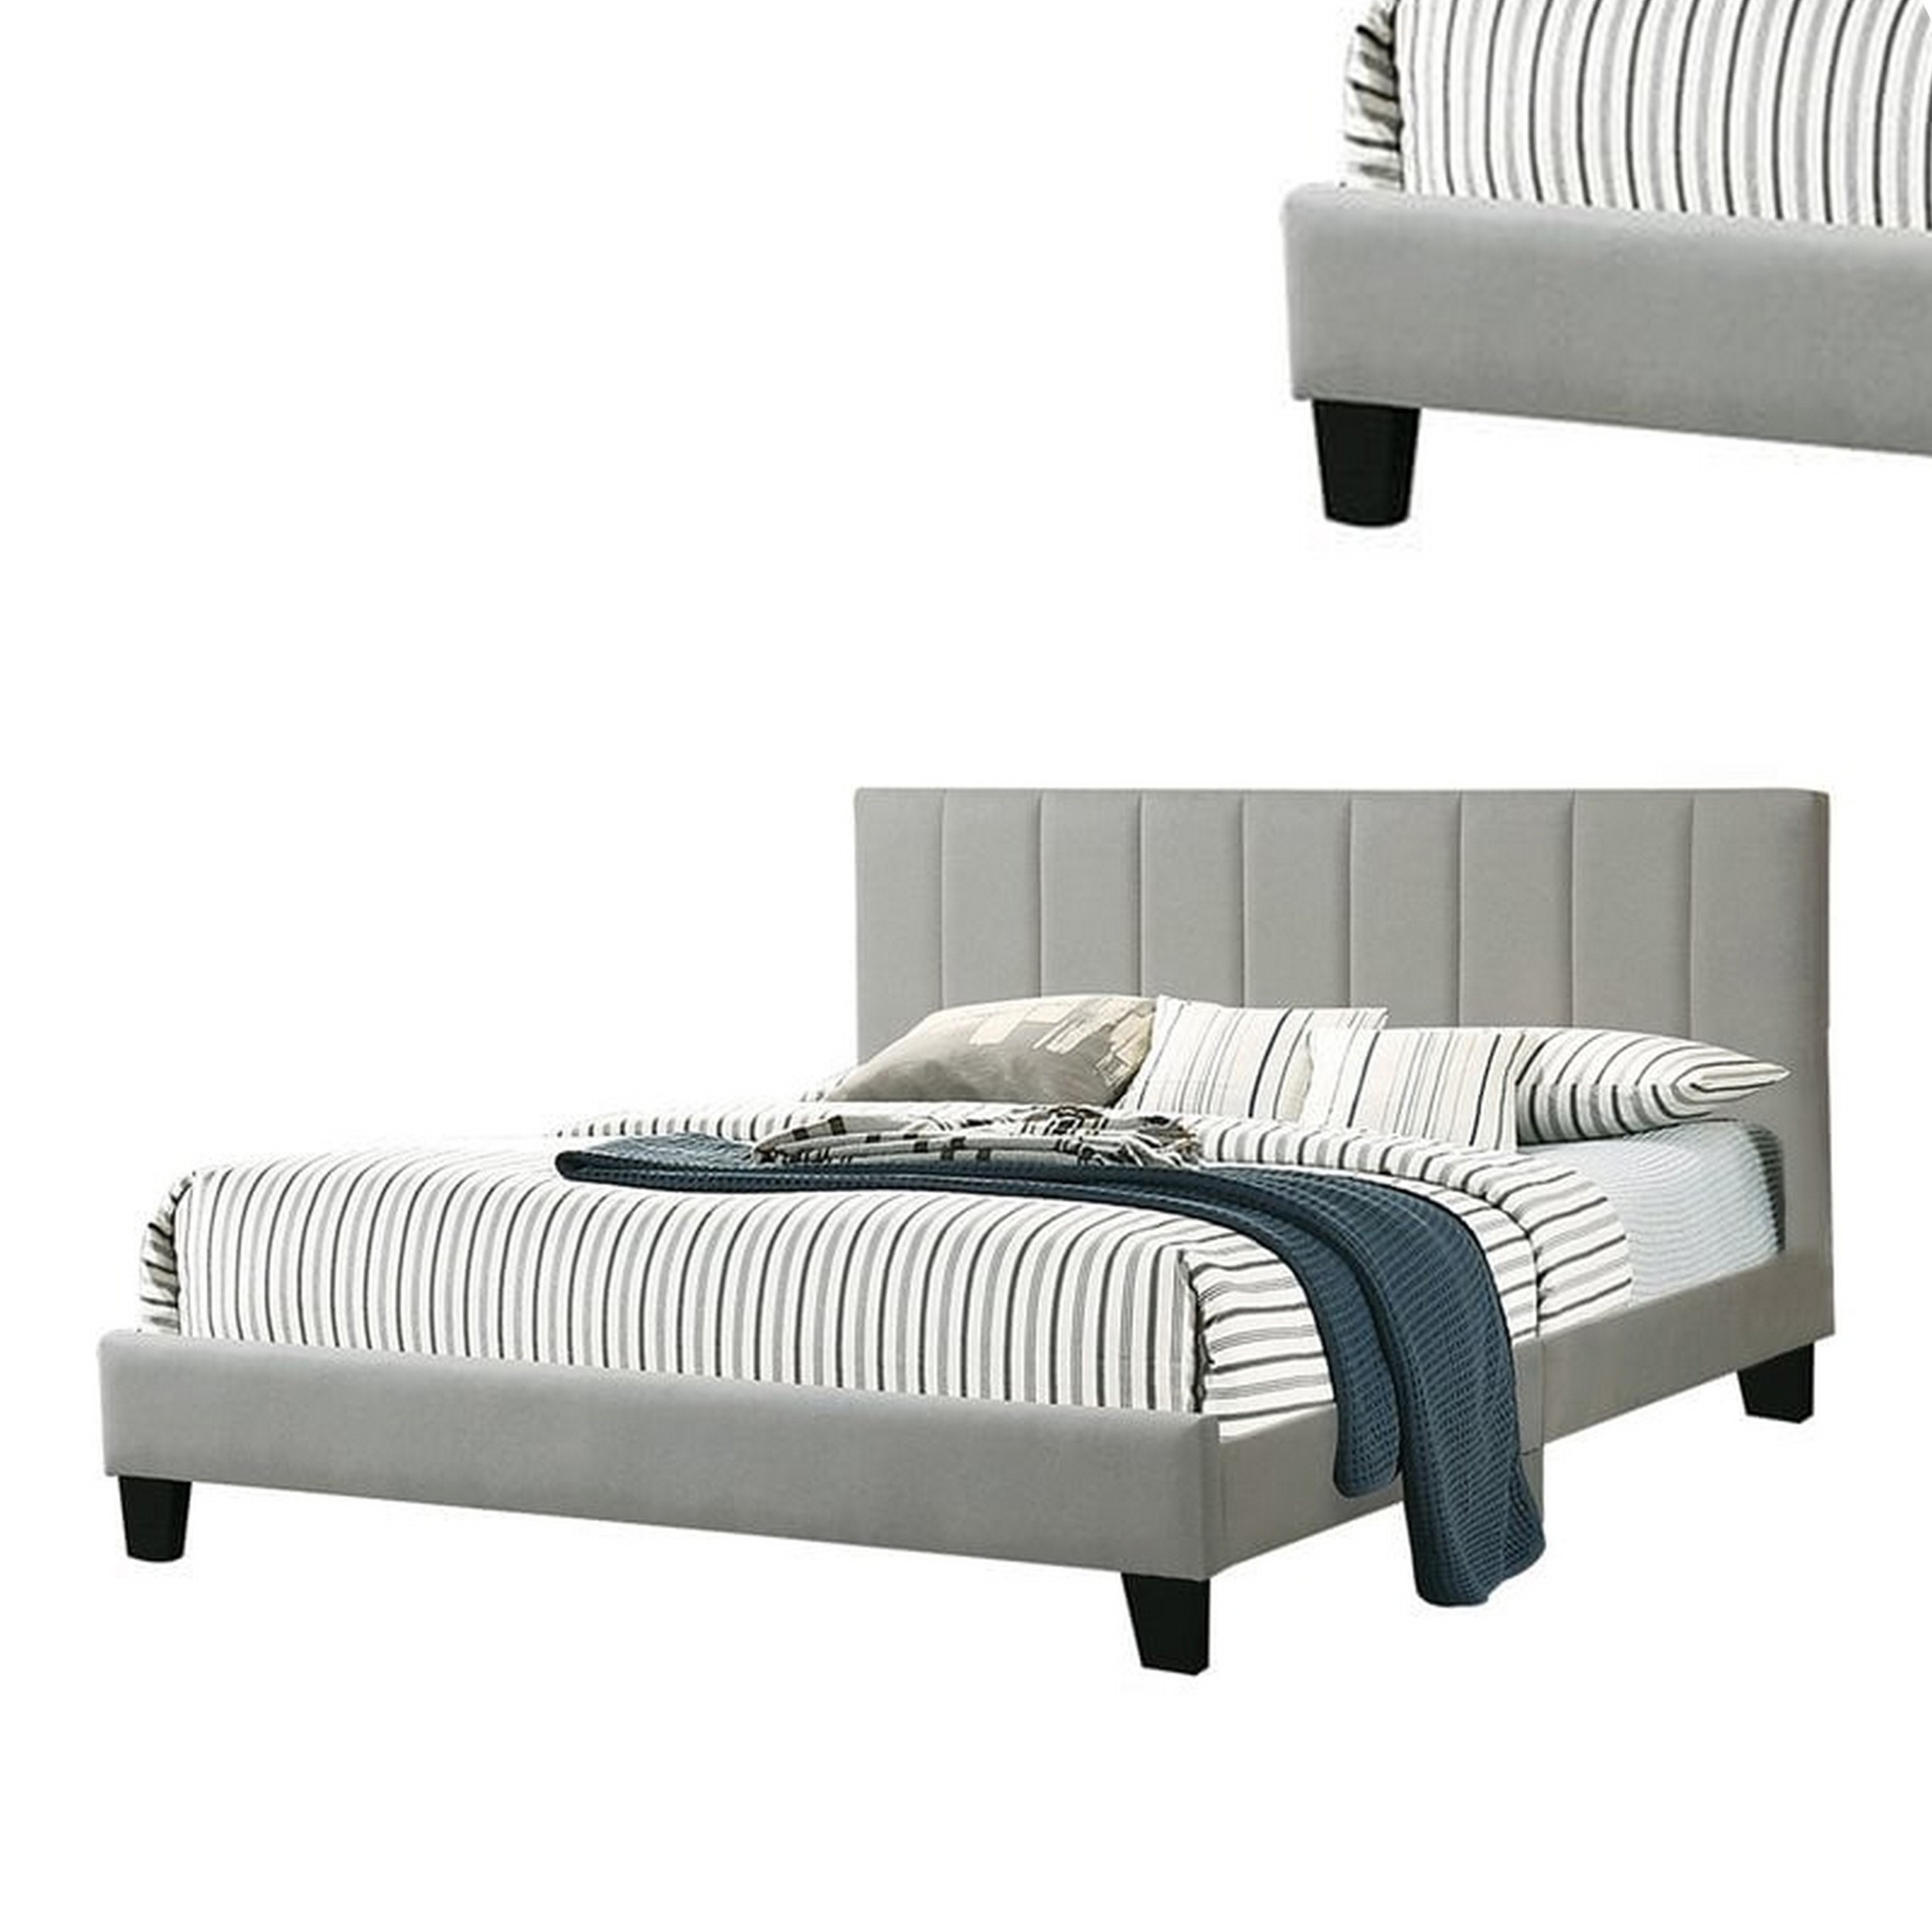 Eve Platform Full Size Bed, Vertical Channel Tufted Light Gray Upholstery- Saltoro Sherpi